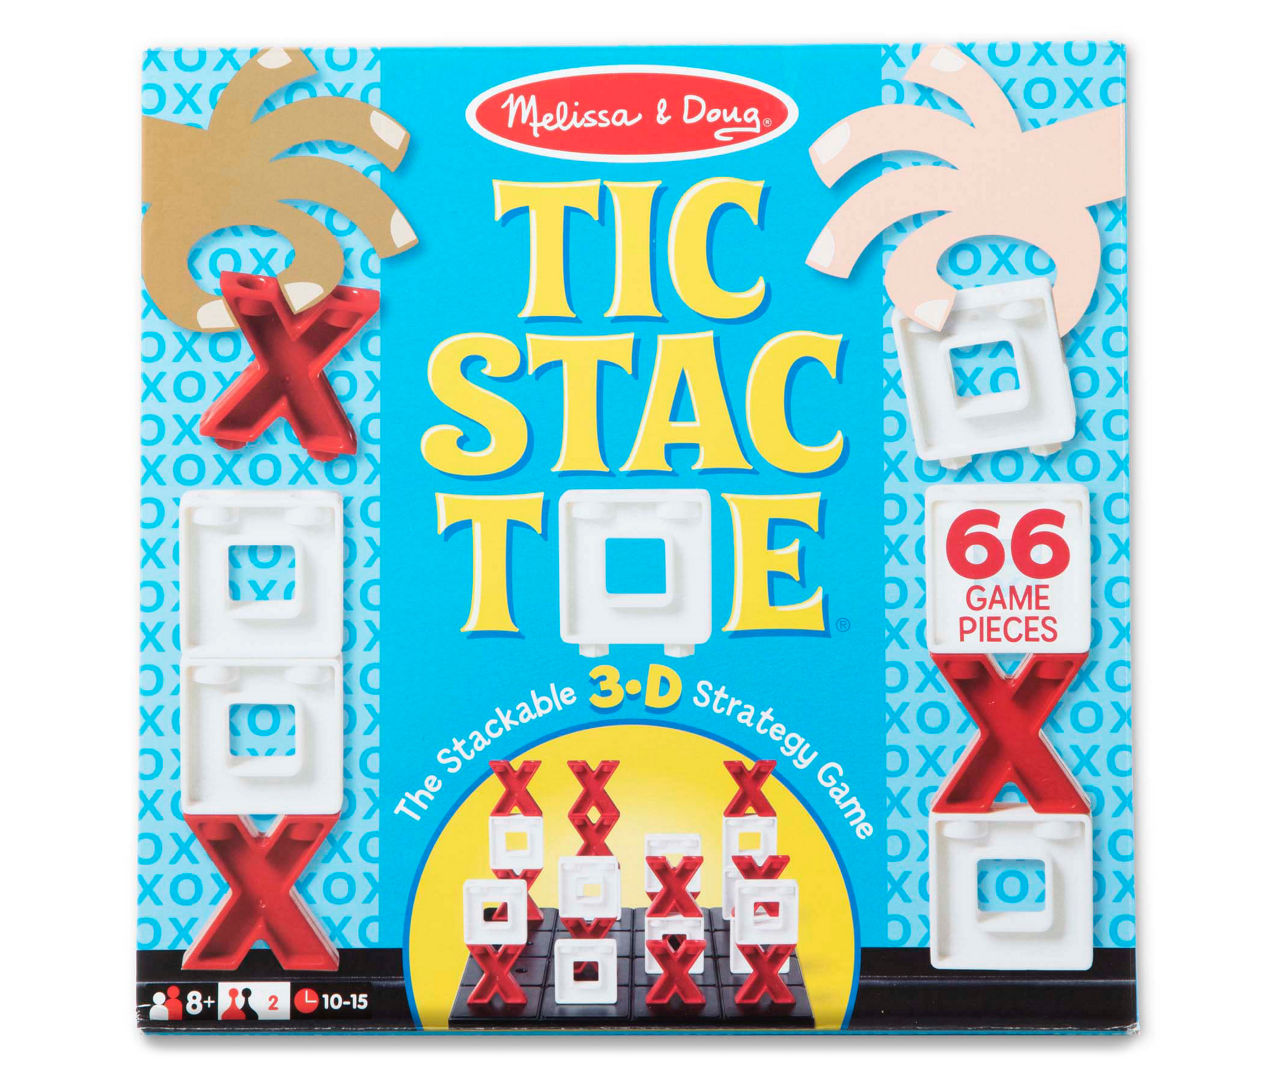 Tic Tac Toe Multiplayer • COKOGAMES